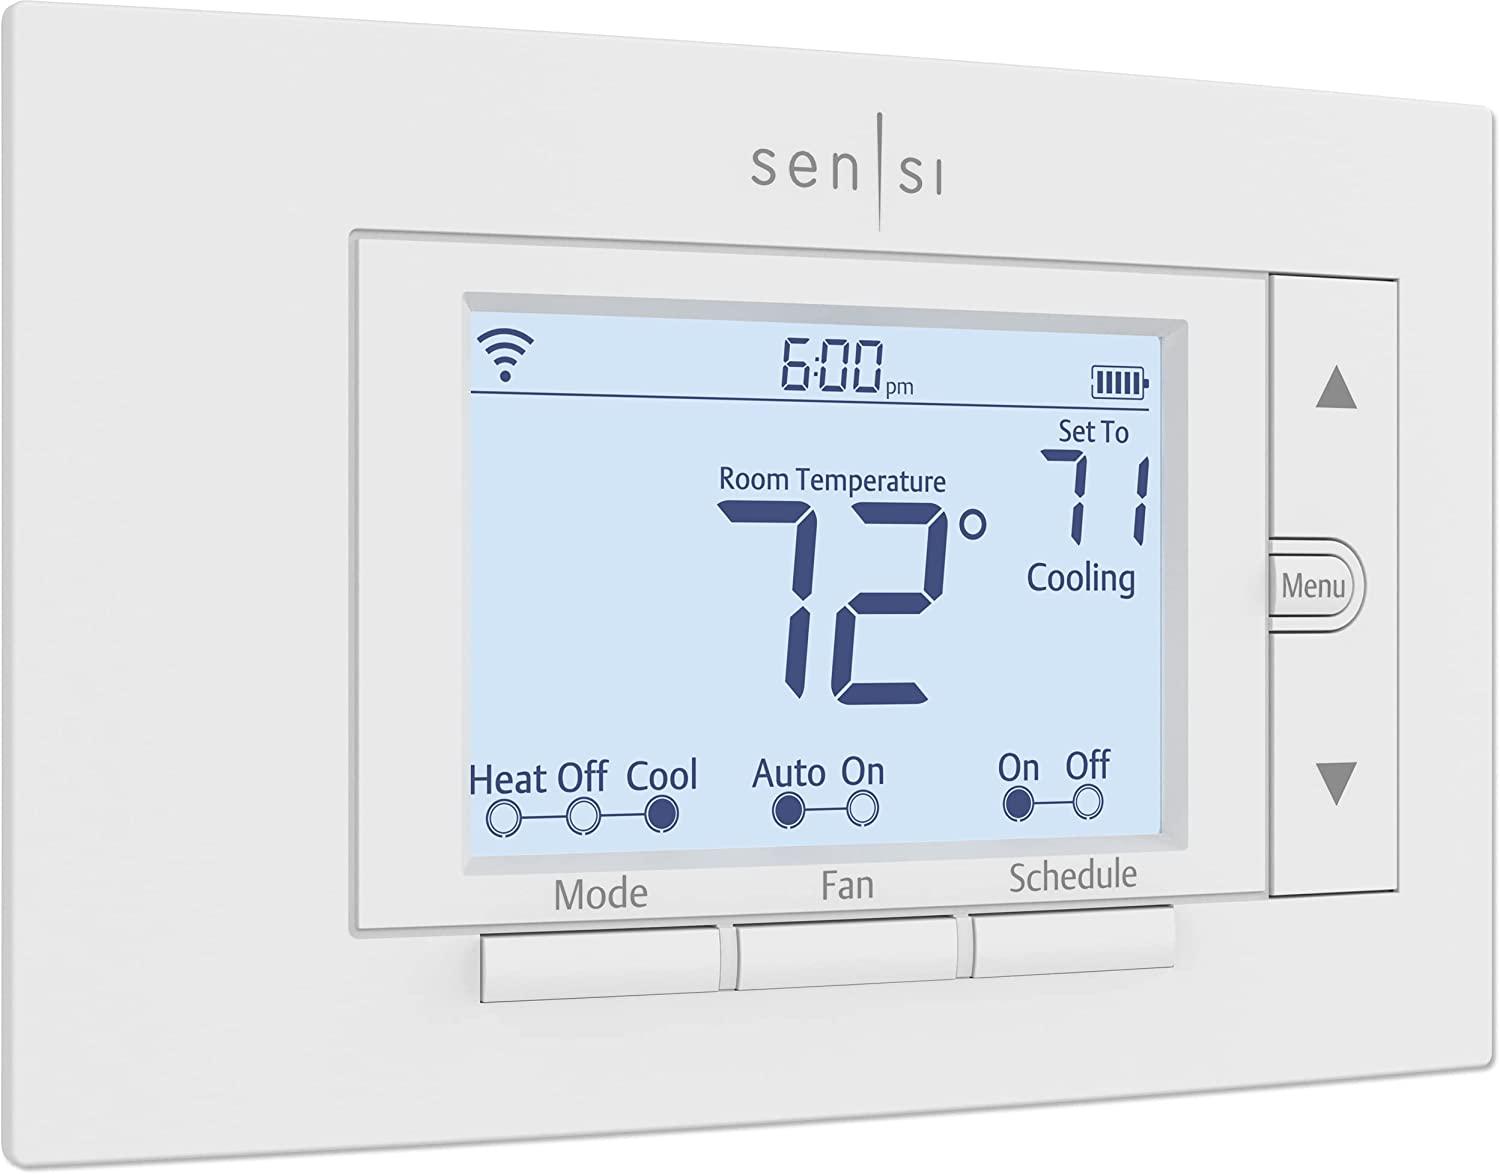 Emerson Sensi Wi-Fi Smart Thermostat for $59.60 Shipped